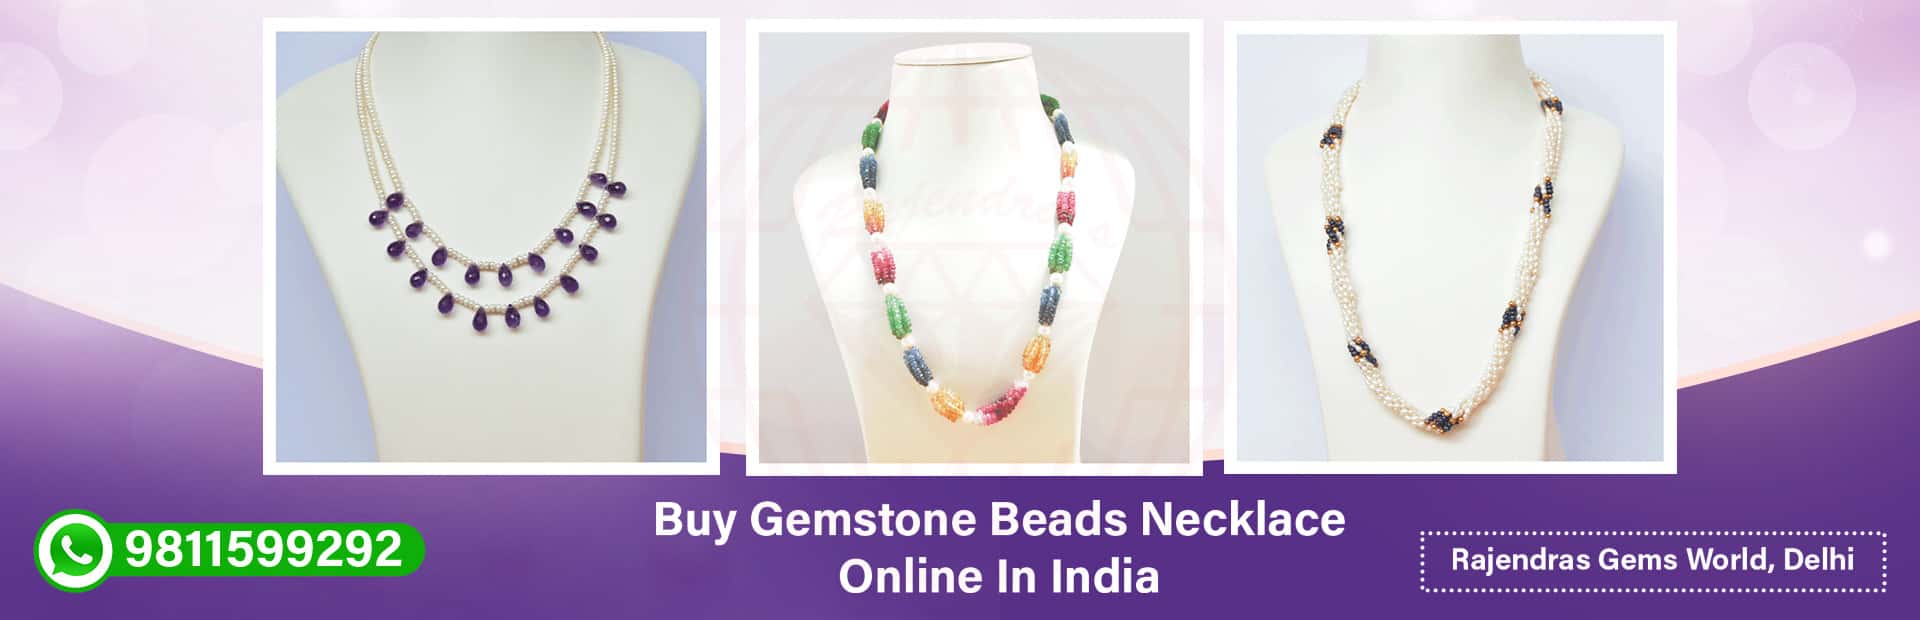 Buy Gemstones Beads Necklace Mala Online at Rajendras Gems, Delhi India